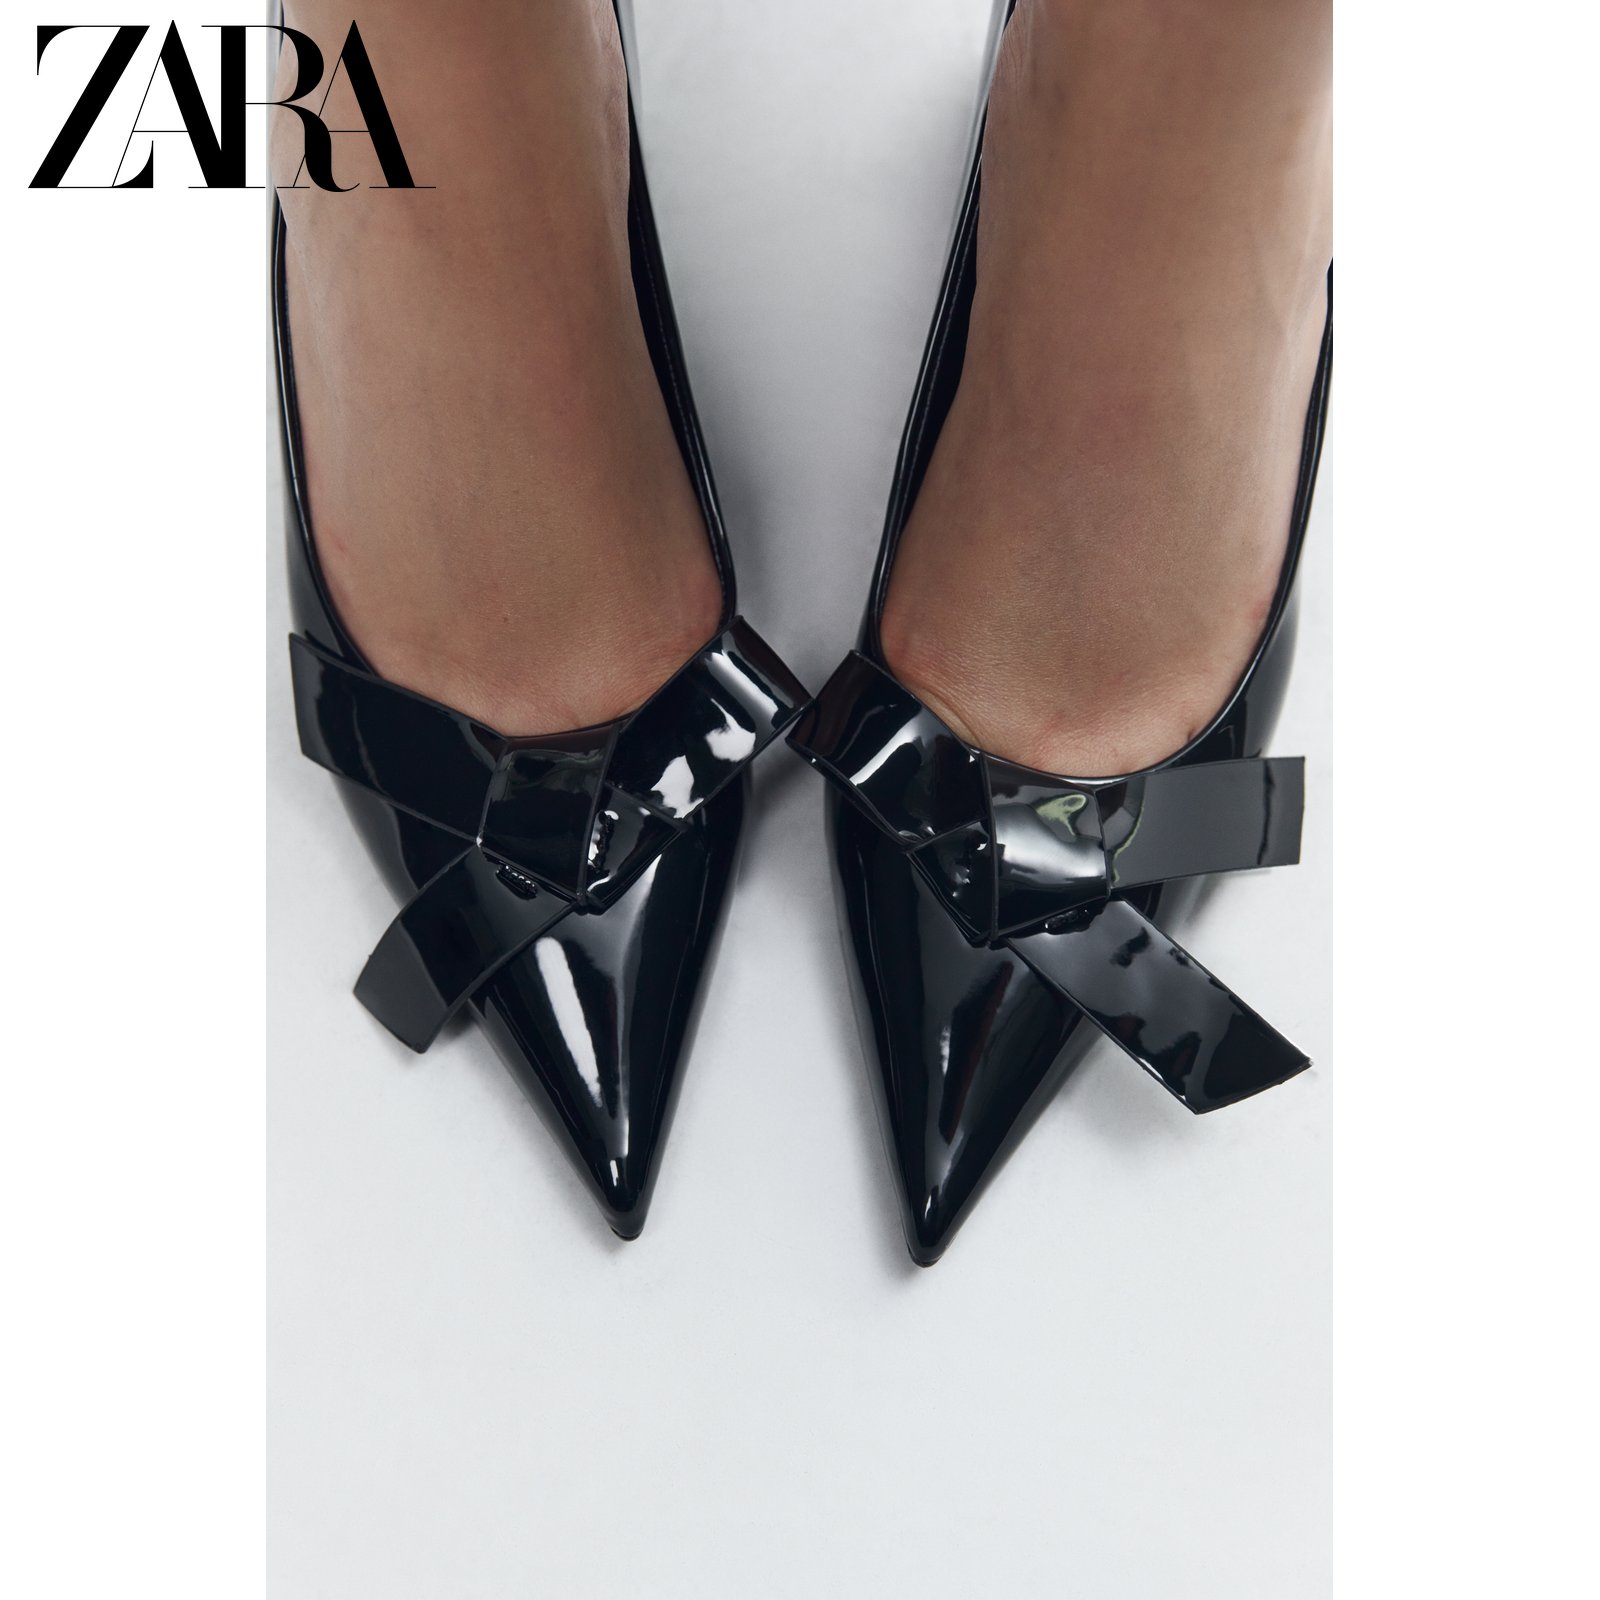 ZARA 新品婦人靴 ブラック リボン装飾 ミュール ハイヒール 2253310 800